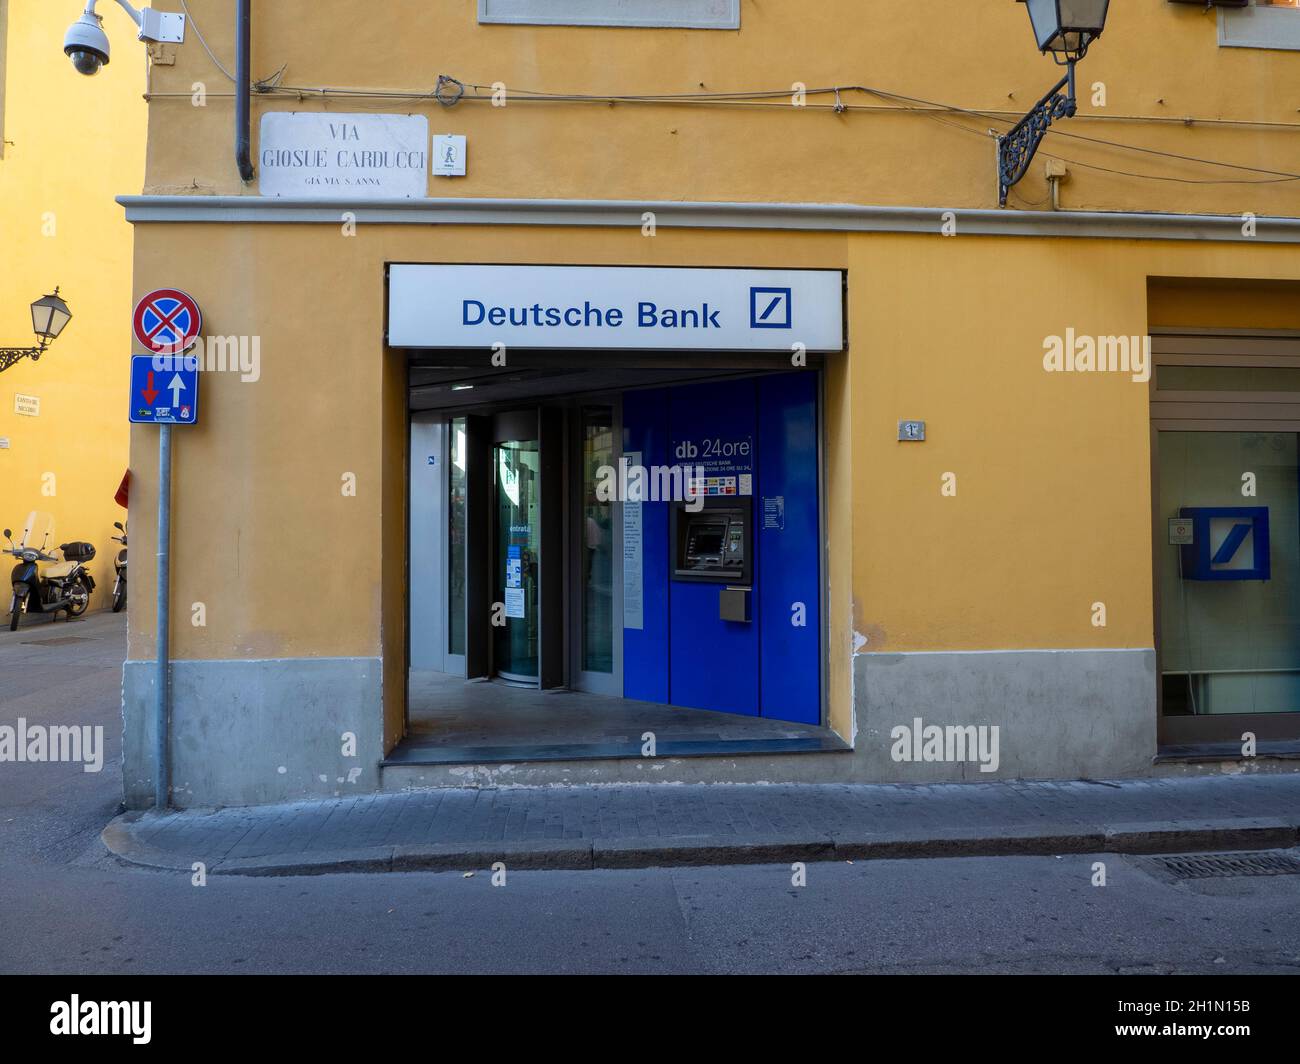 Branch of Deutsche Bank in Via Giosué Carducci - Pisa Stock Photo